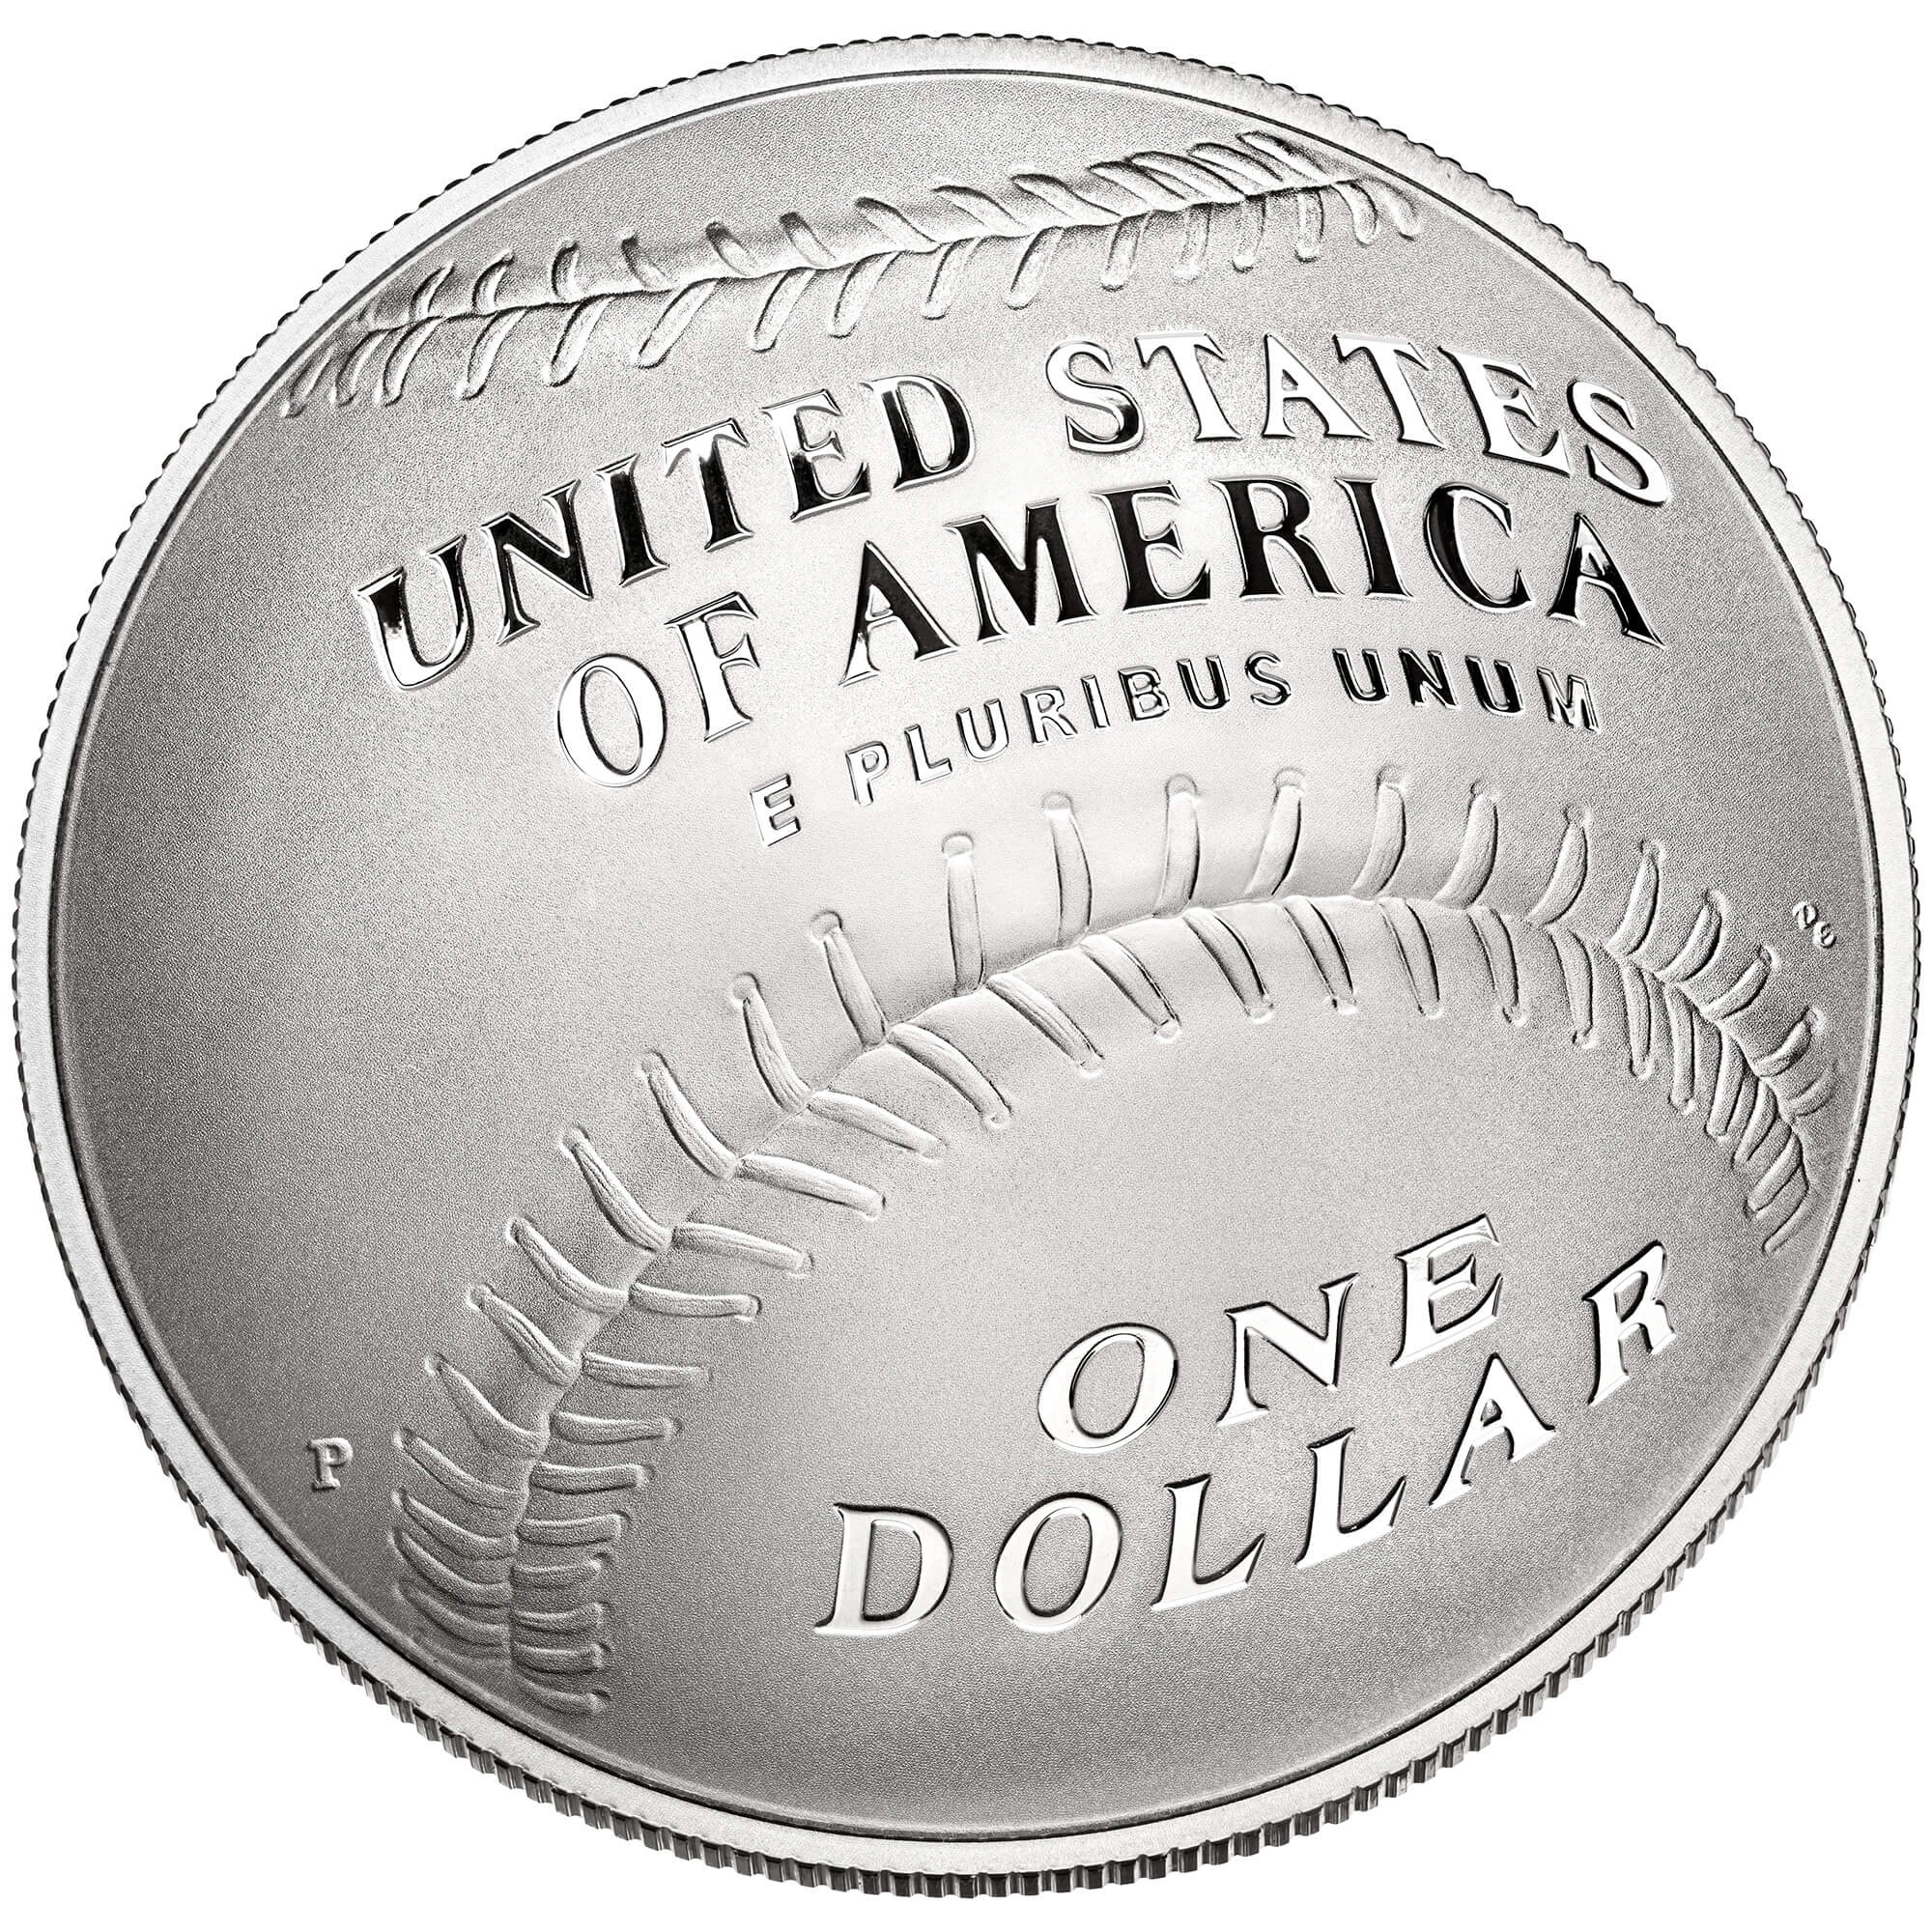 US 1 Dollar 2014 P